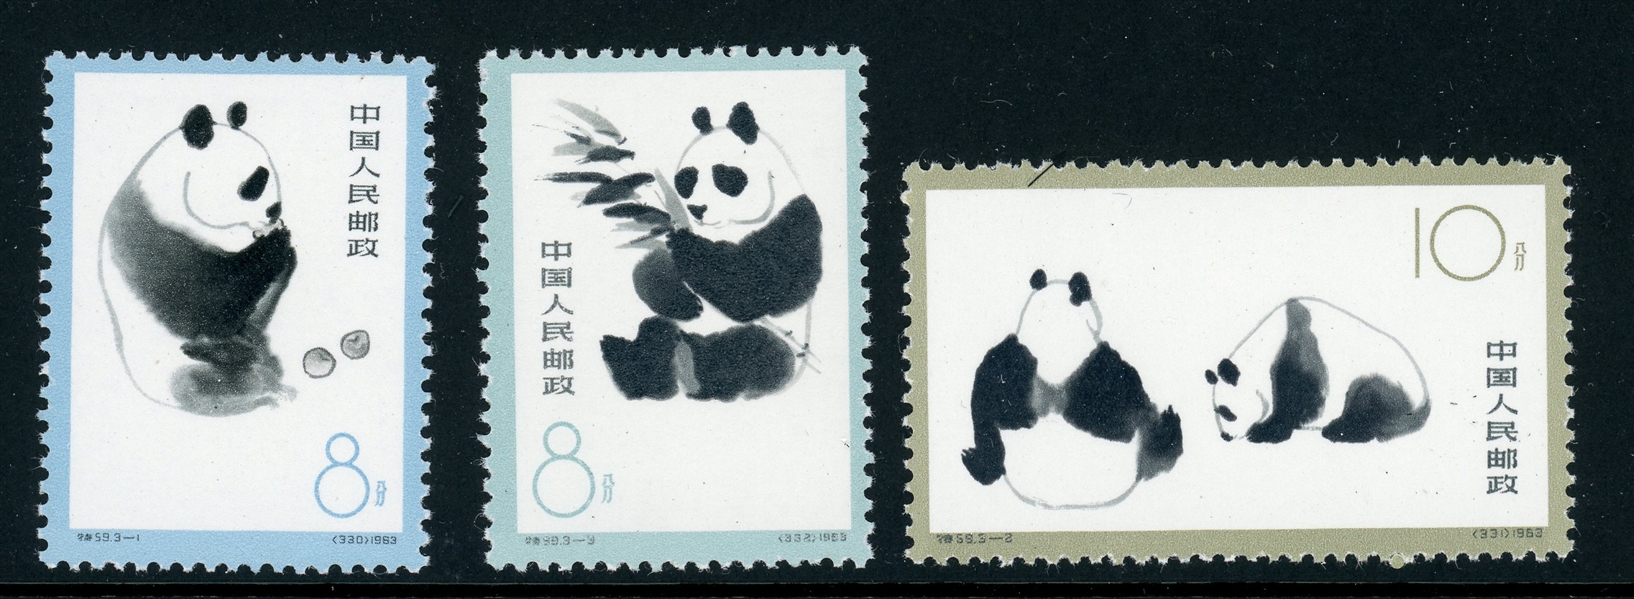 People's Republic of China Scott 708-710 MH Complete Set - 1963 Pandas (SCV $150)